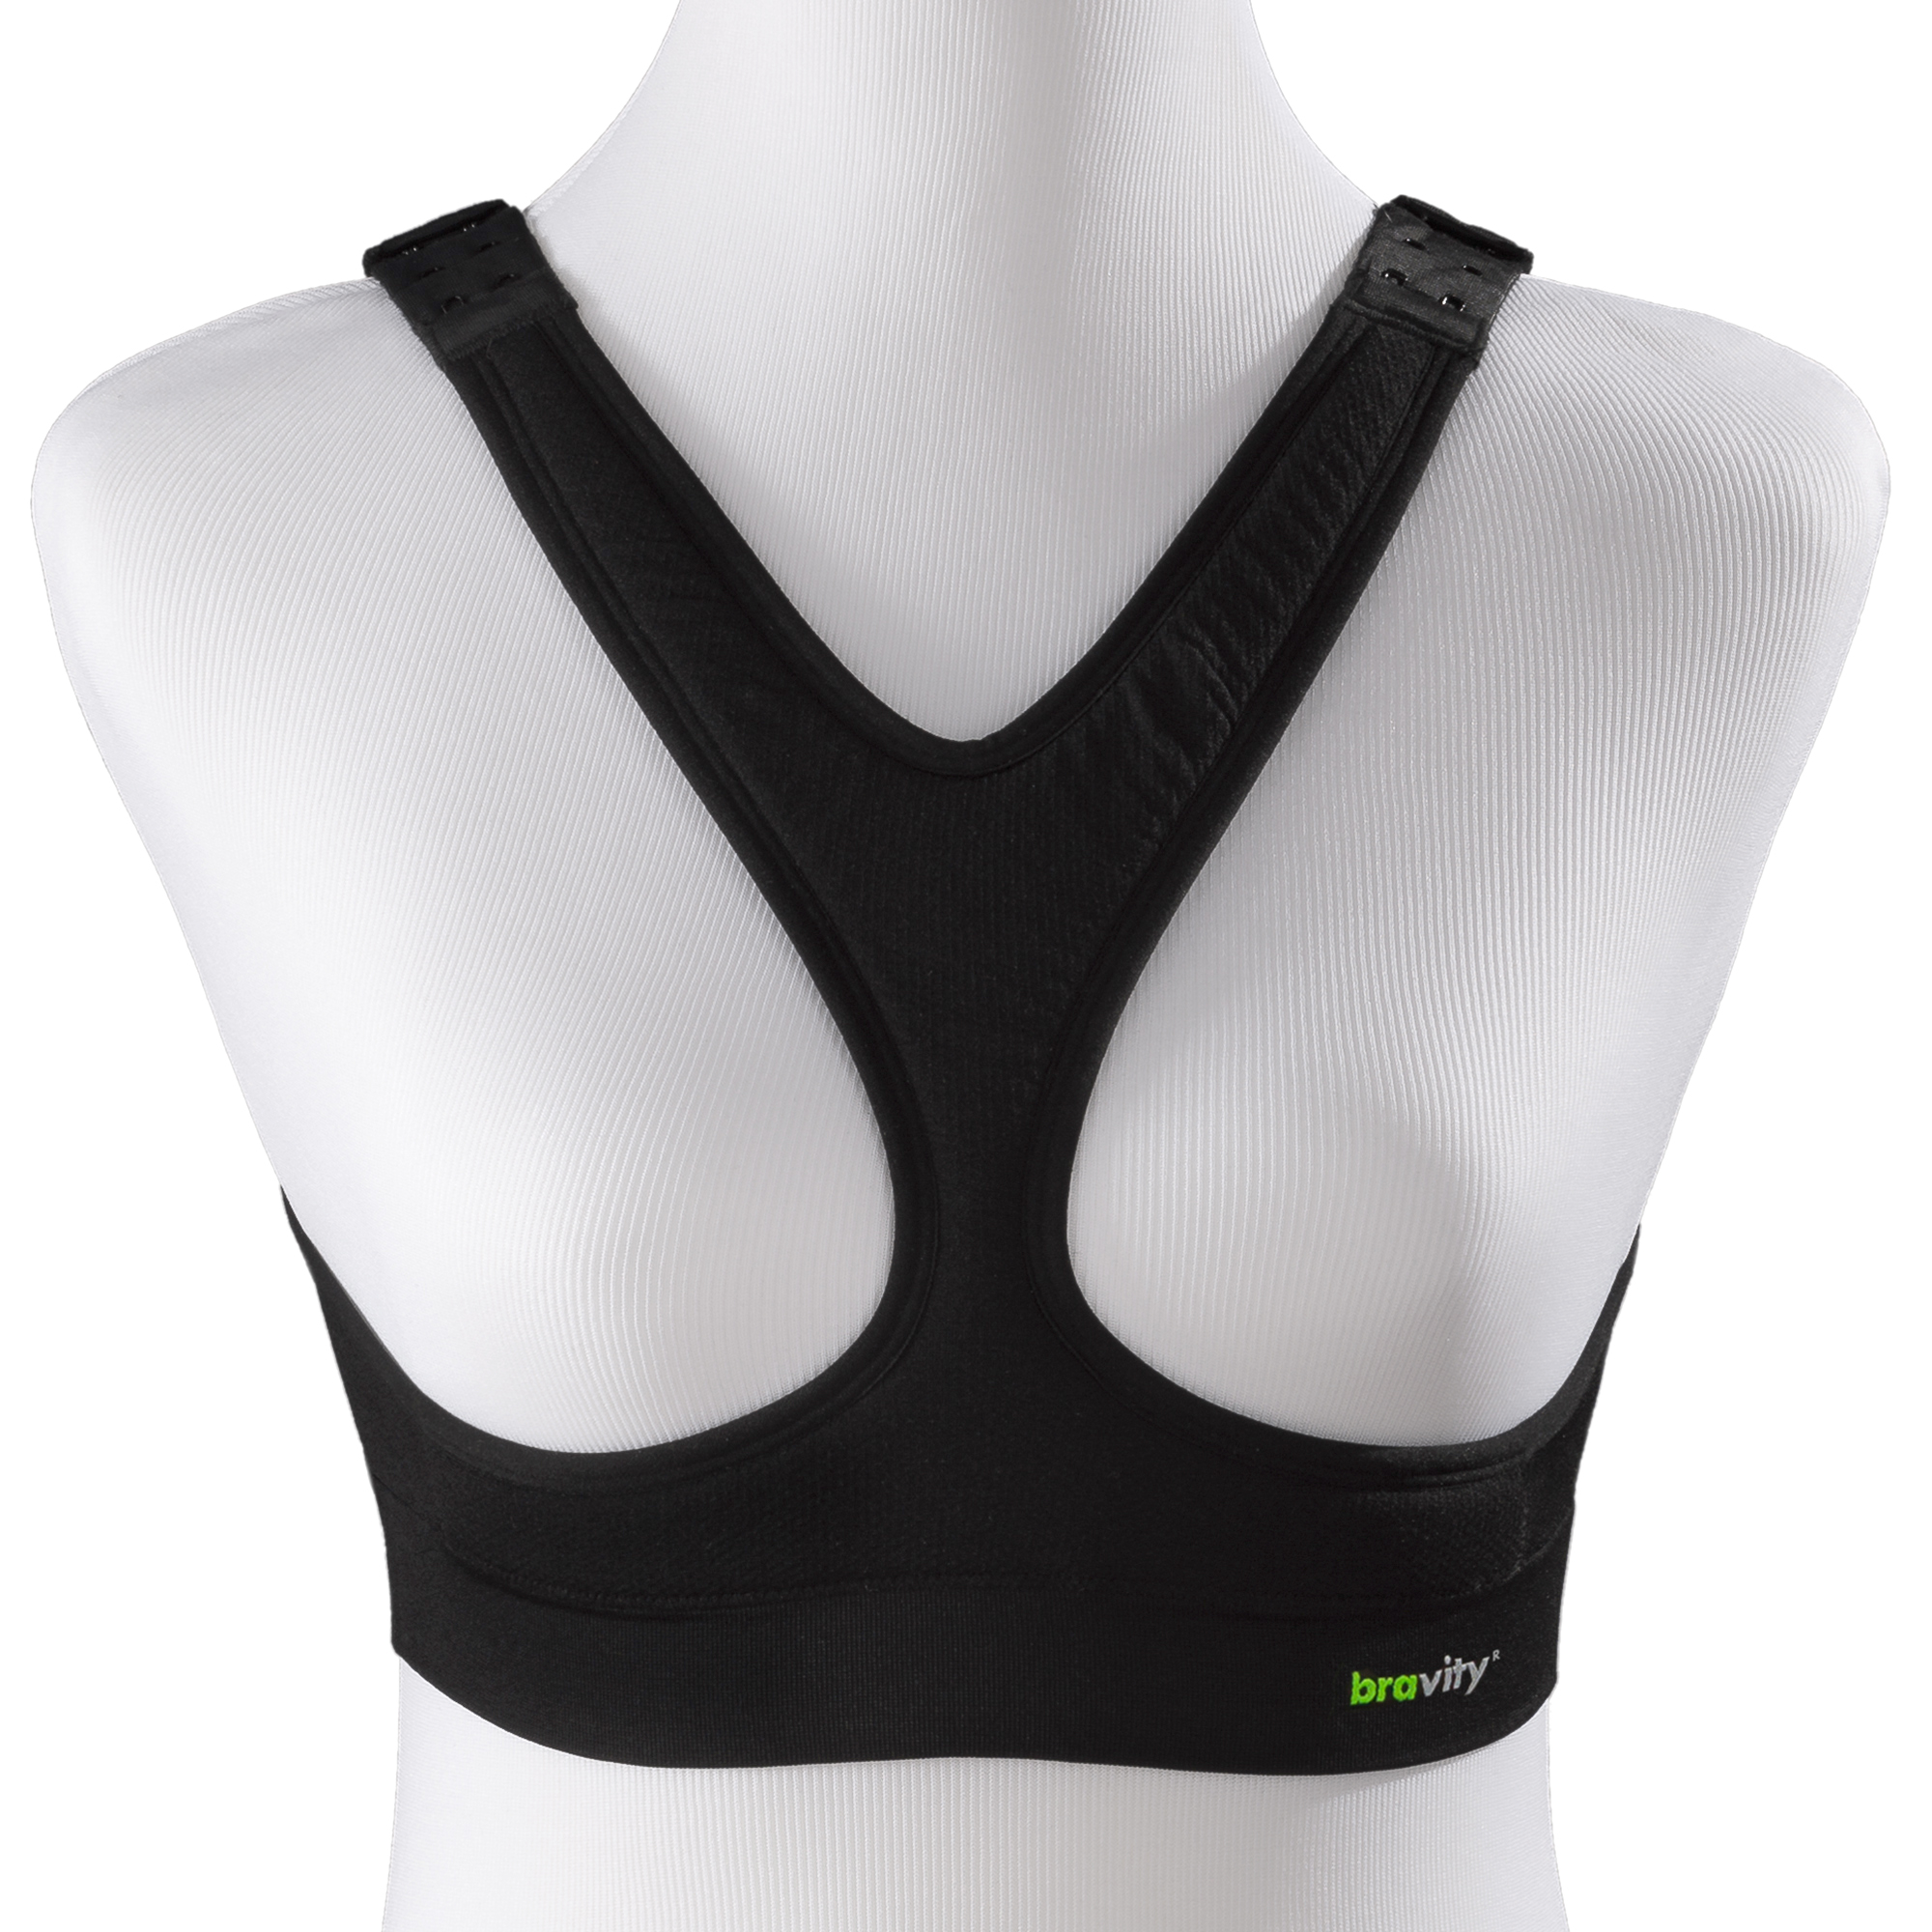 Bravity black bra product image on white.jpg